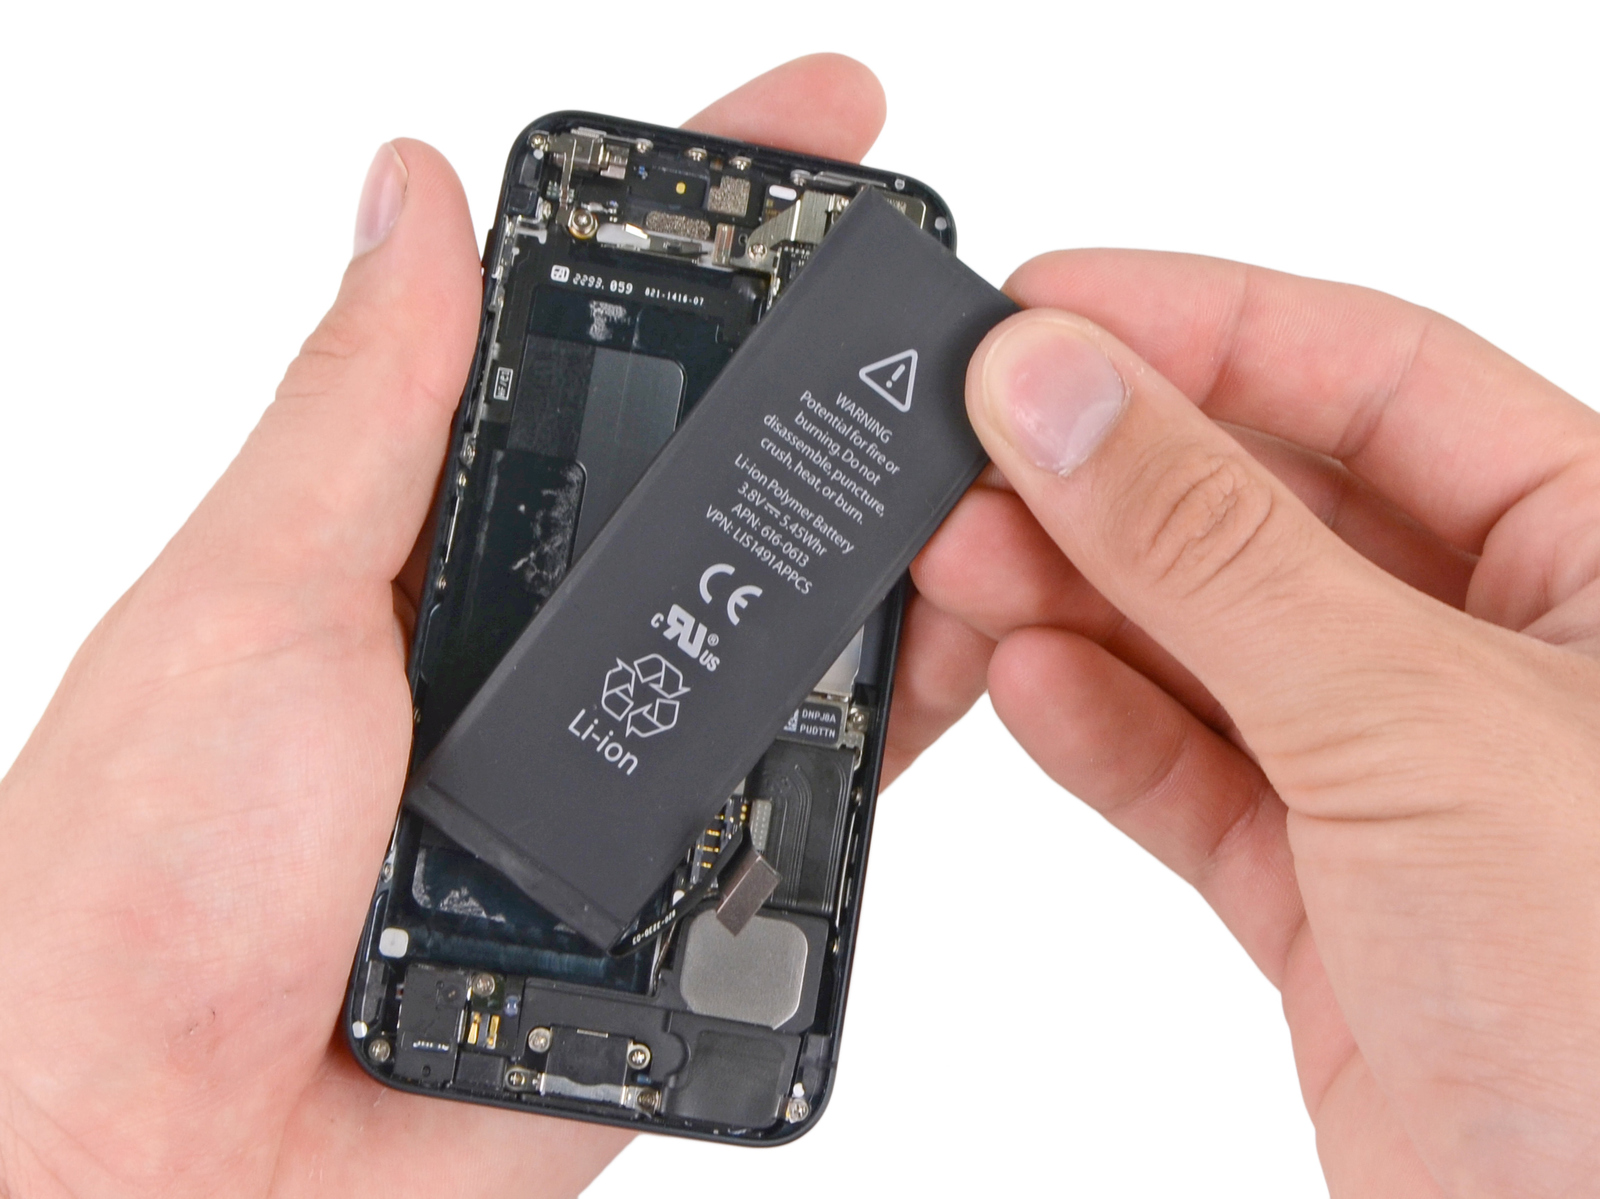 Apple thừa nhận làm
chậm
iPhone khi pin 